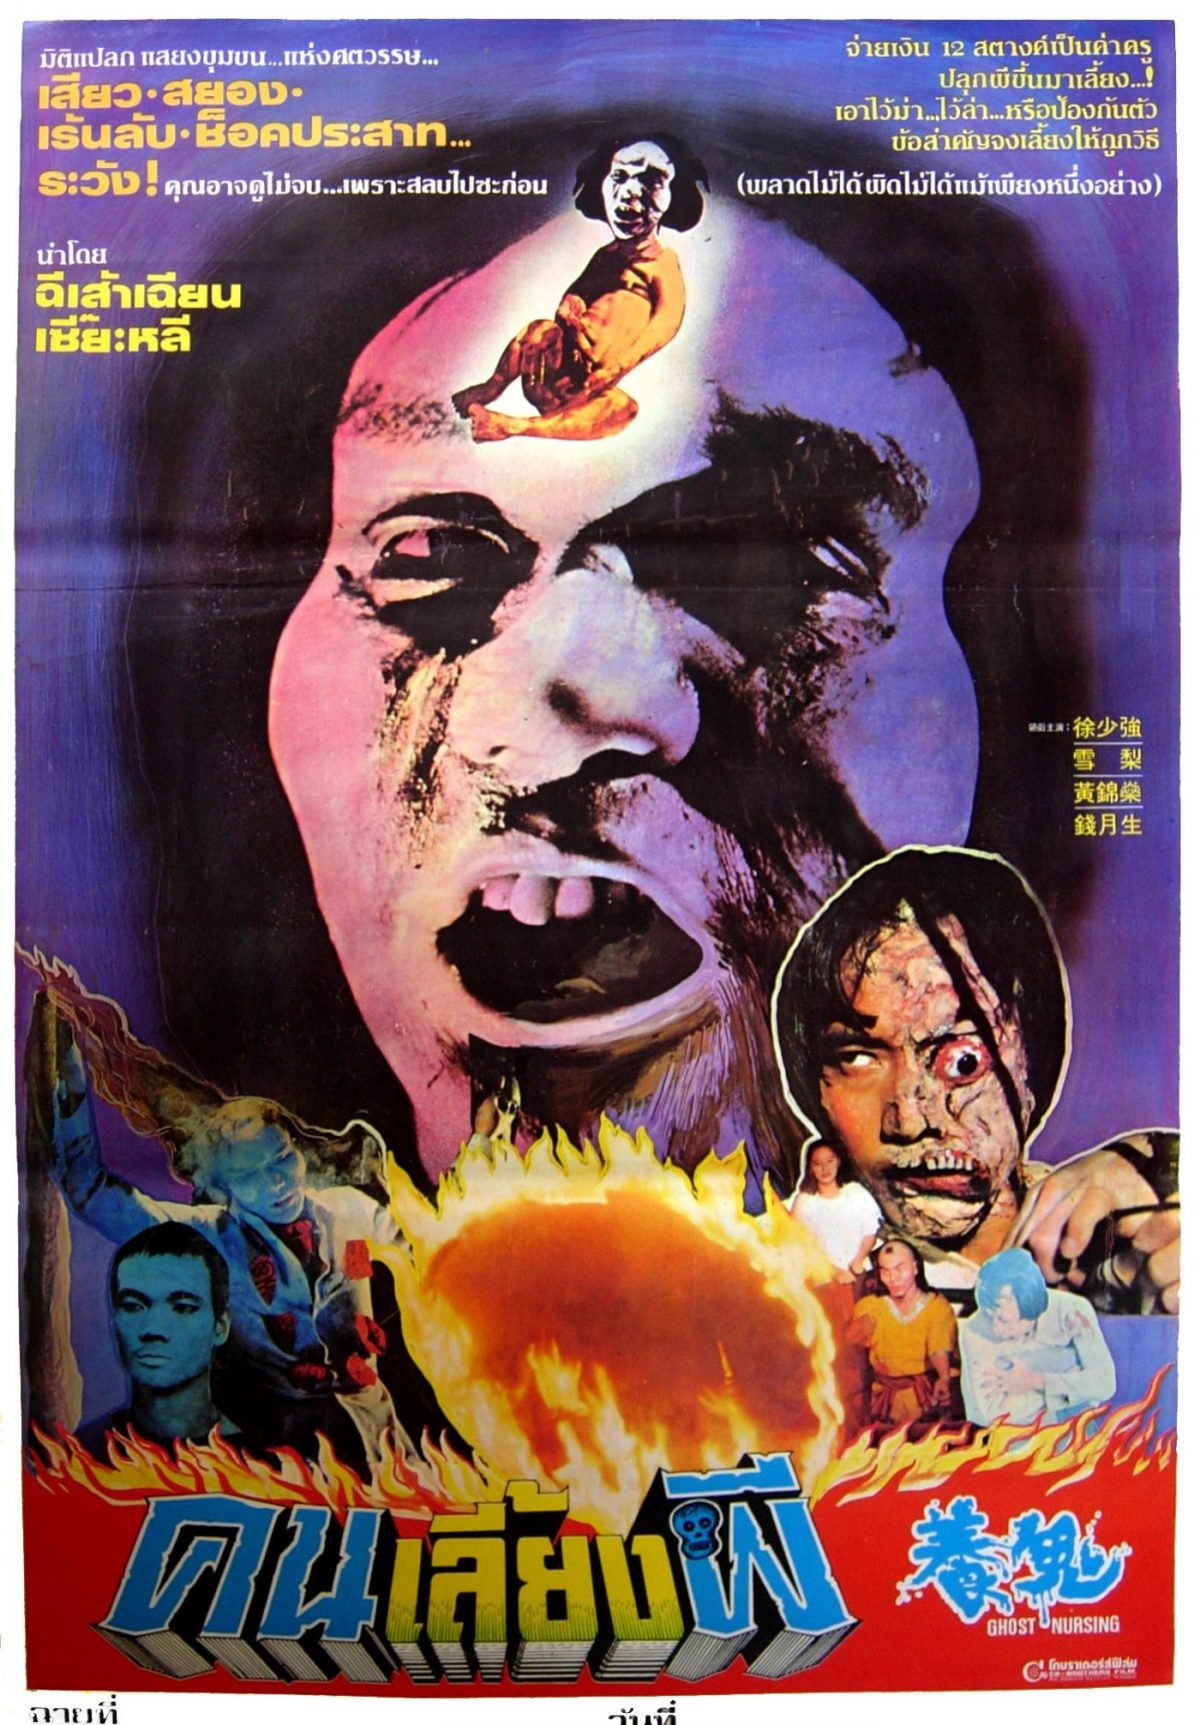 Thailand, movie posters, artwork, Ghost Nursing